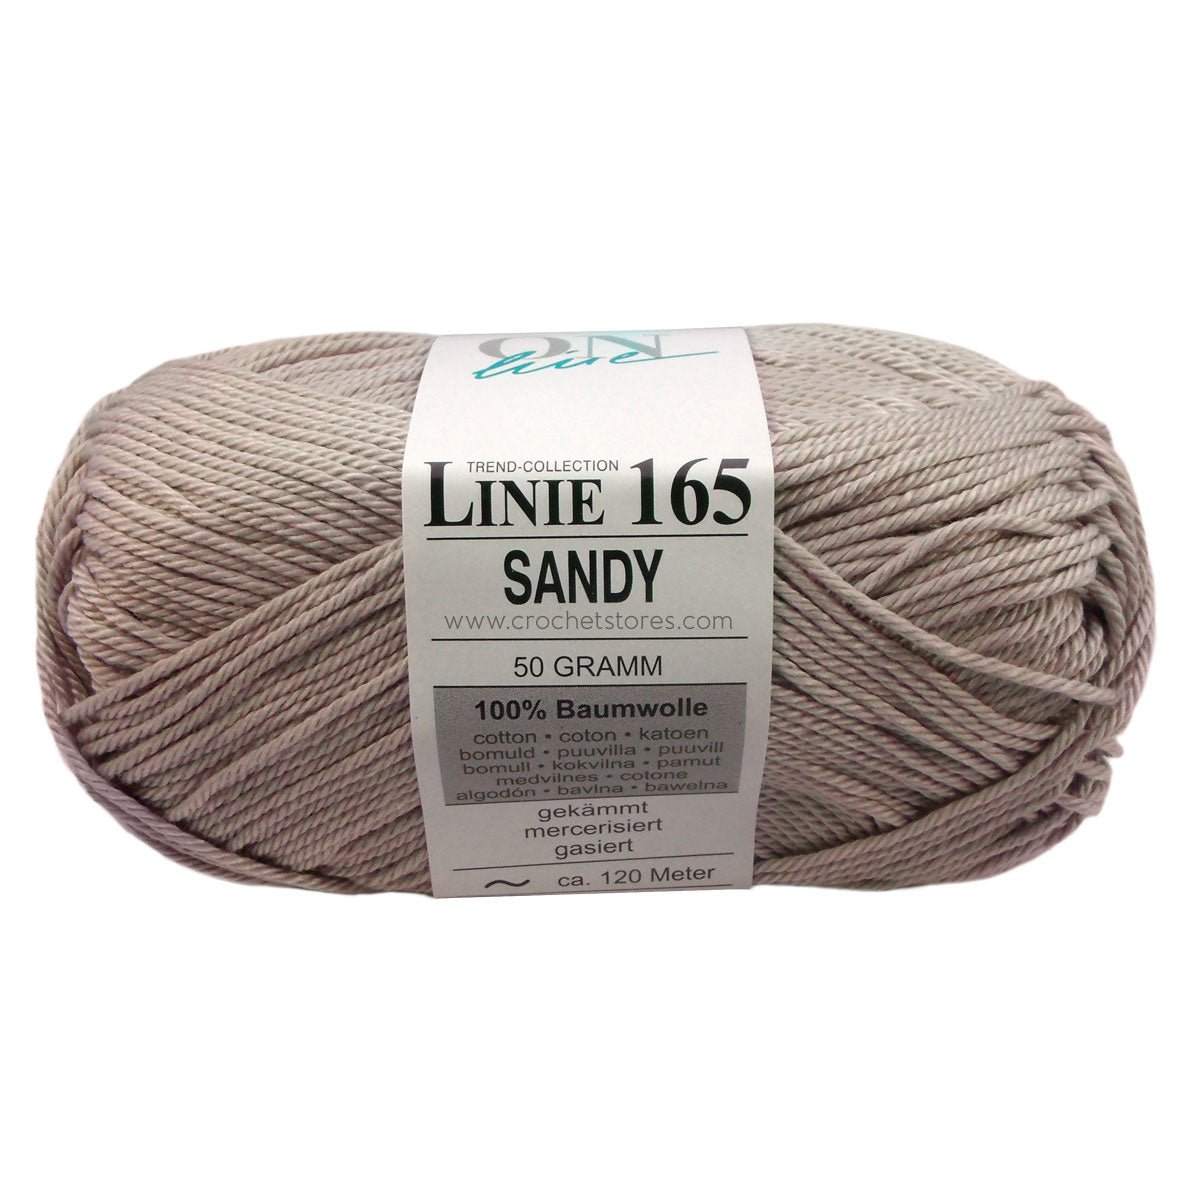 SANDY - Crochetstores110165-00604014366097655